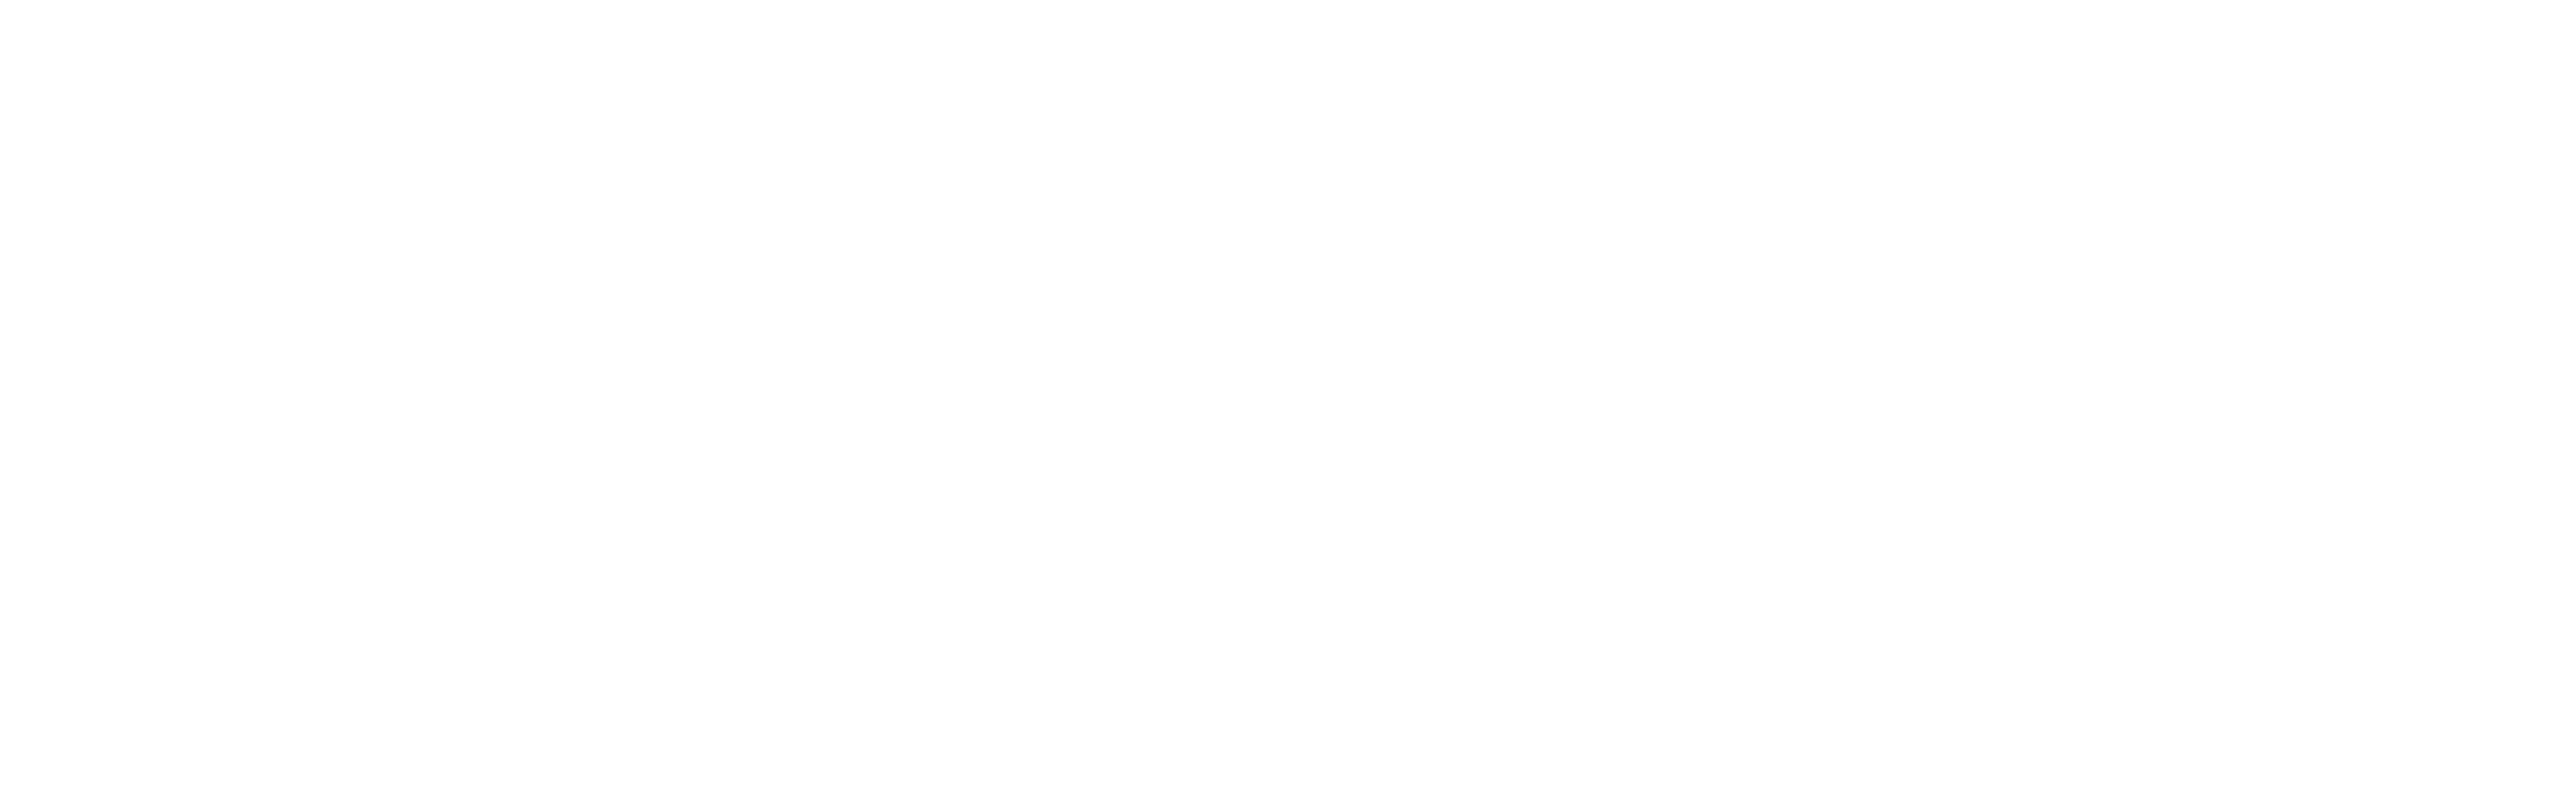 Semantic Creation Logo PNG